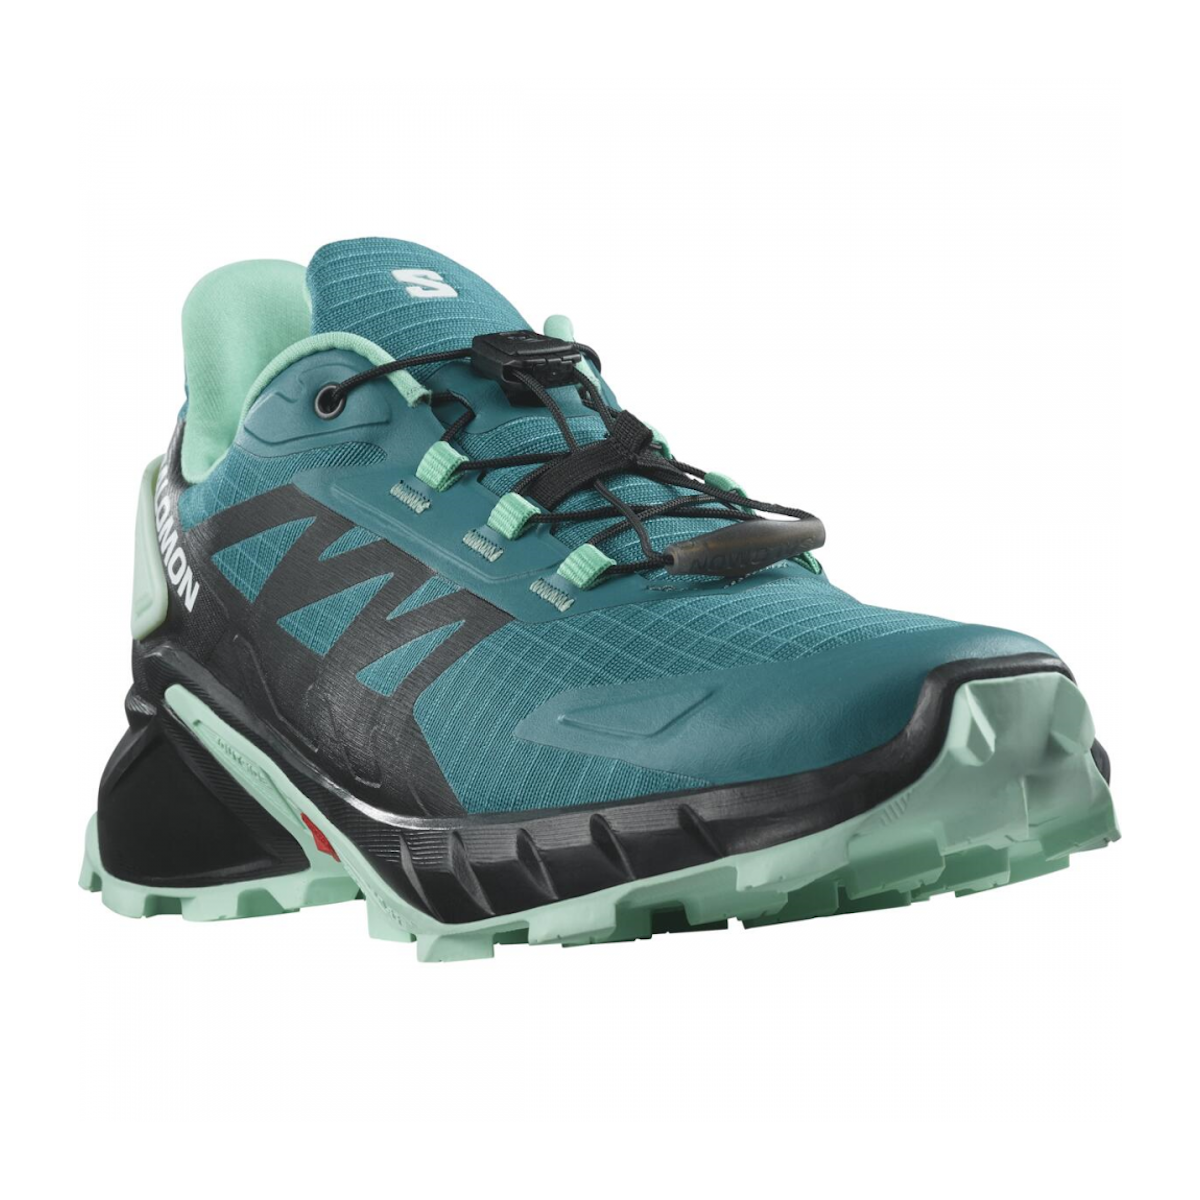 SALOMON SUPERCROSS 4 W trail running shoes - blue/black/green